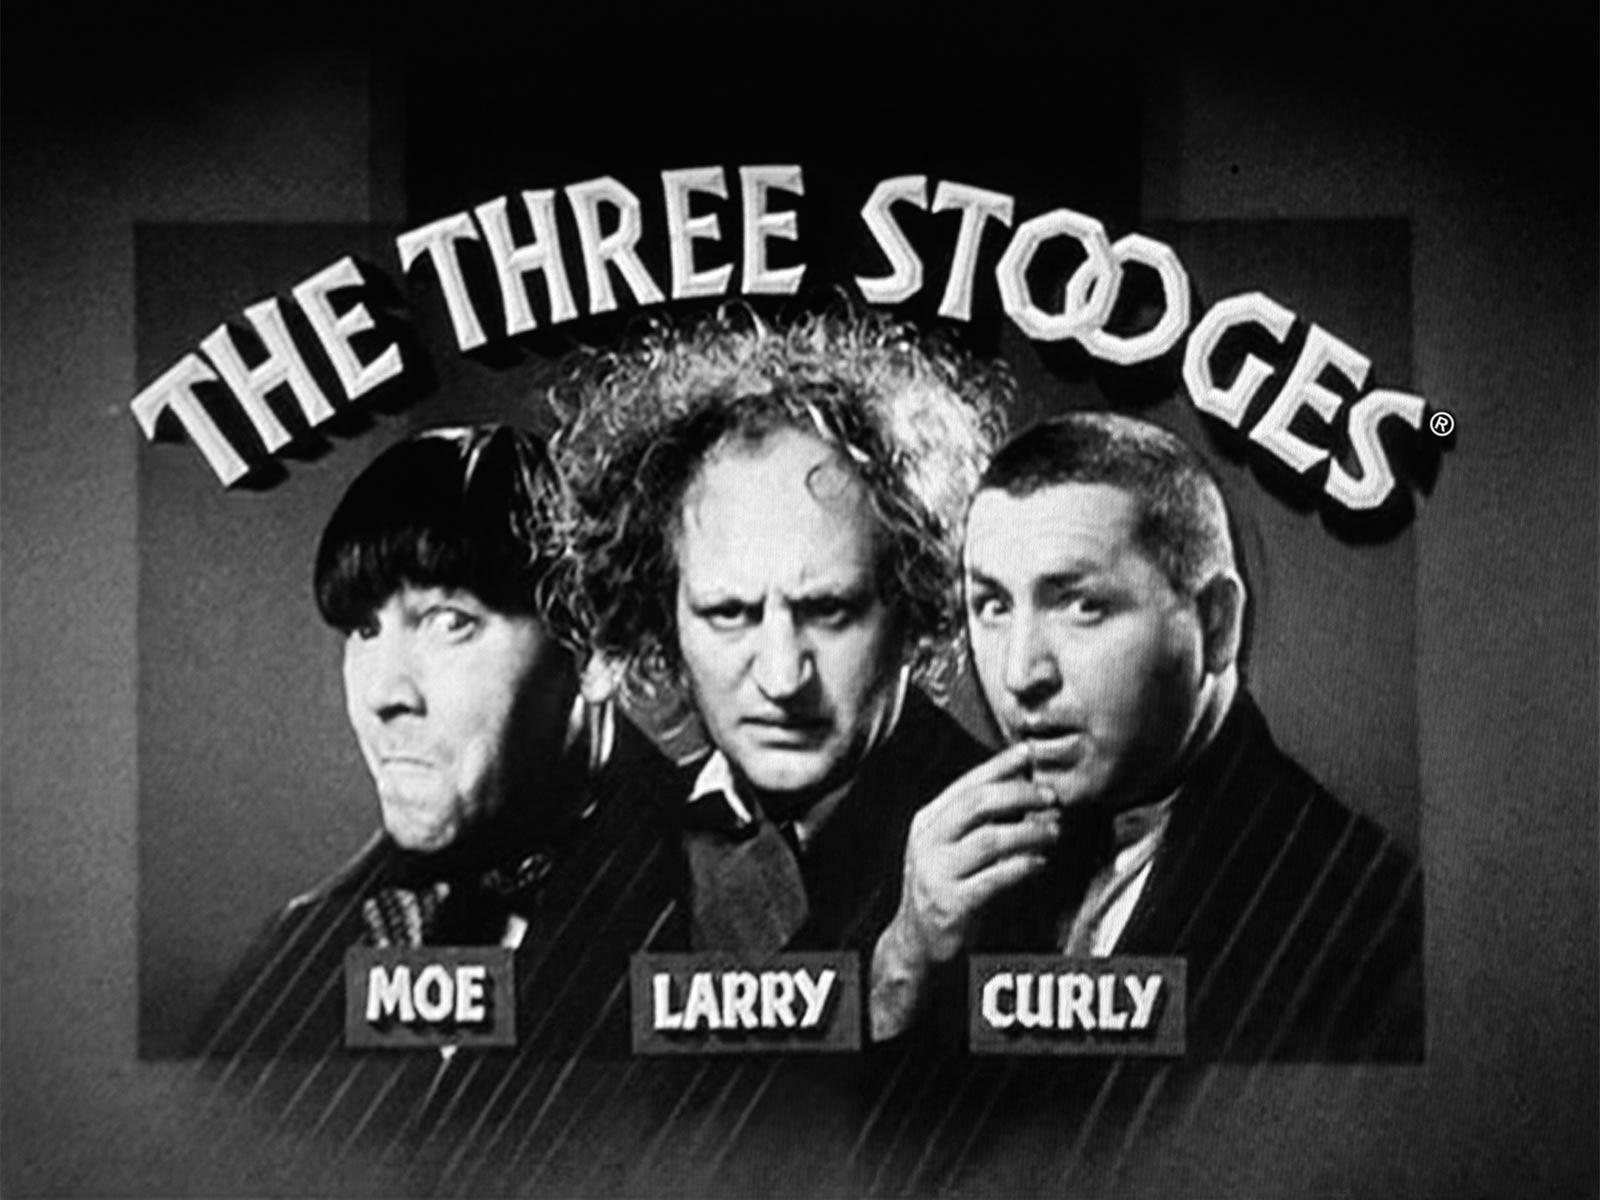 Peliculas: the three stooges